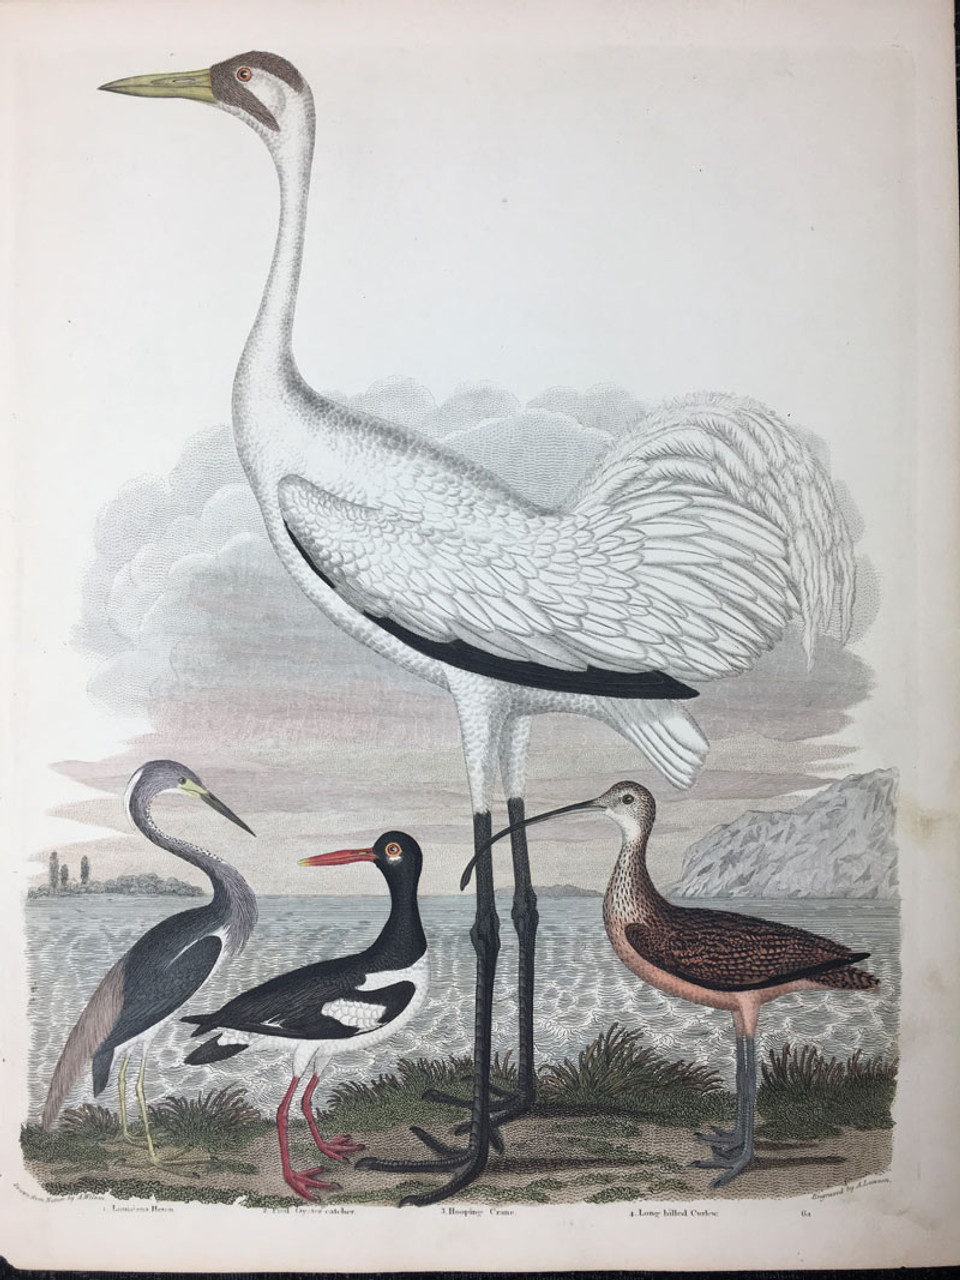 Plate 64: Louisiana Heron, Pied Oyster Catcher, Hooping Crane et al